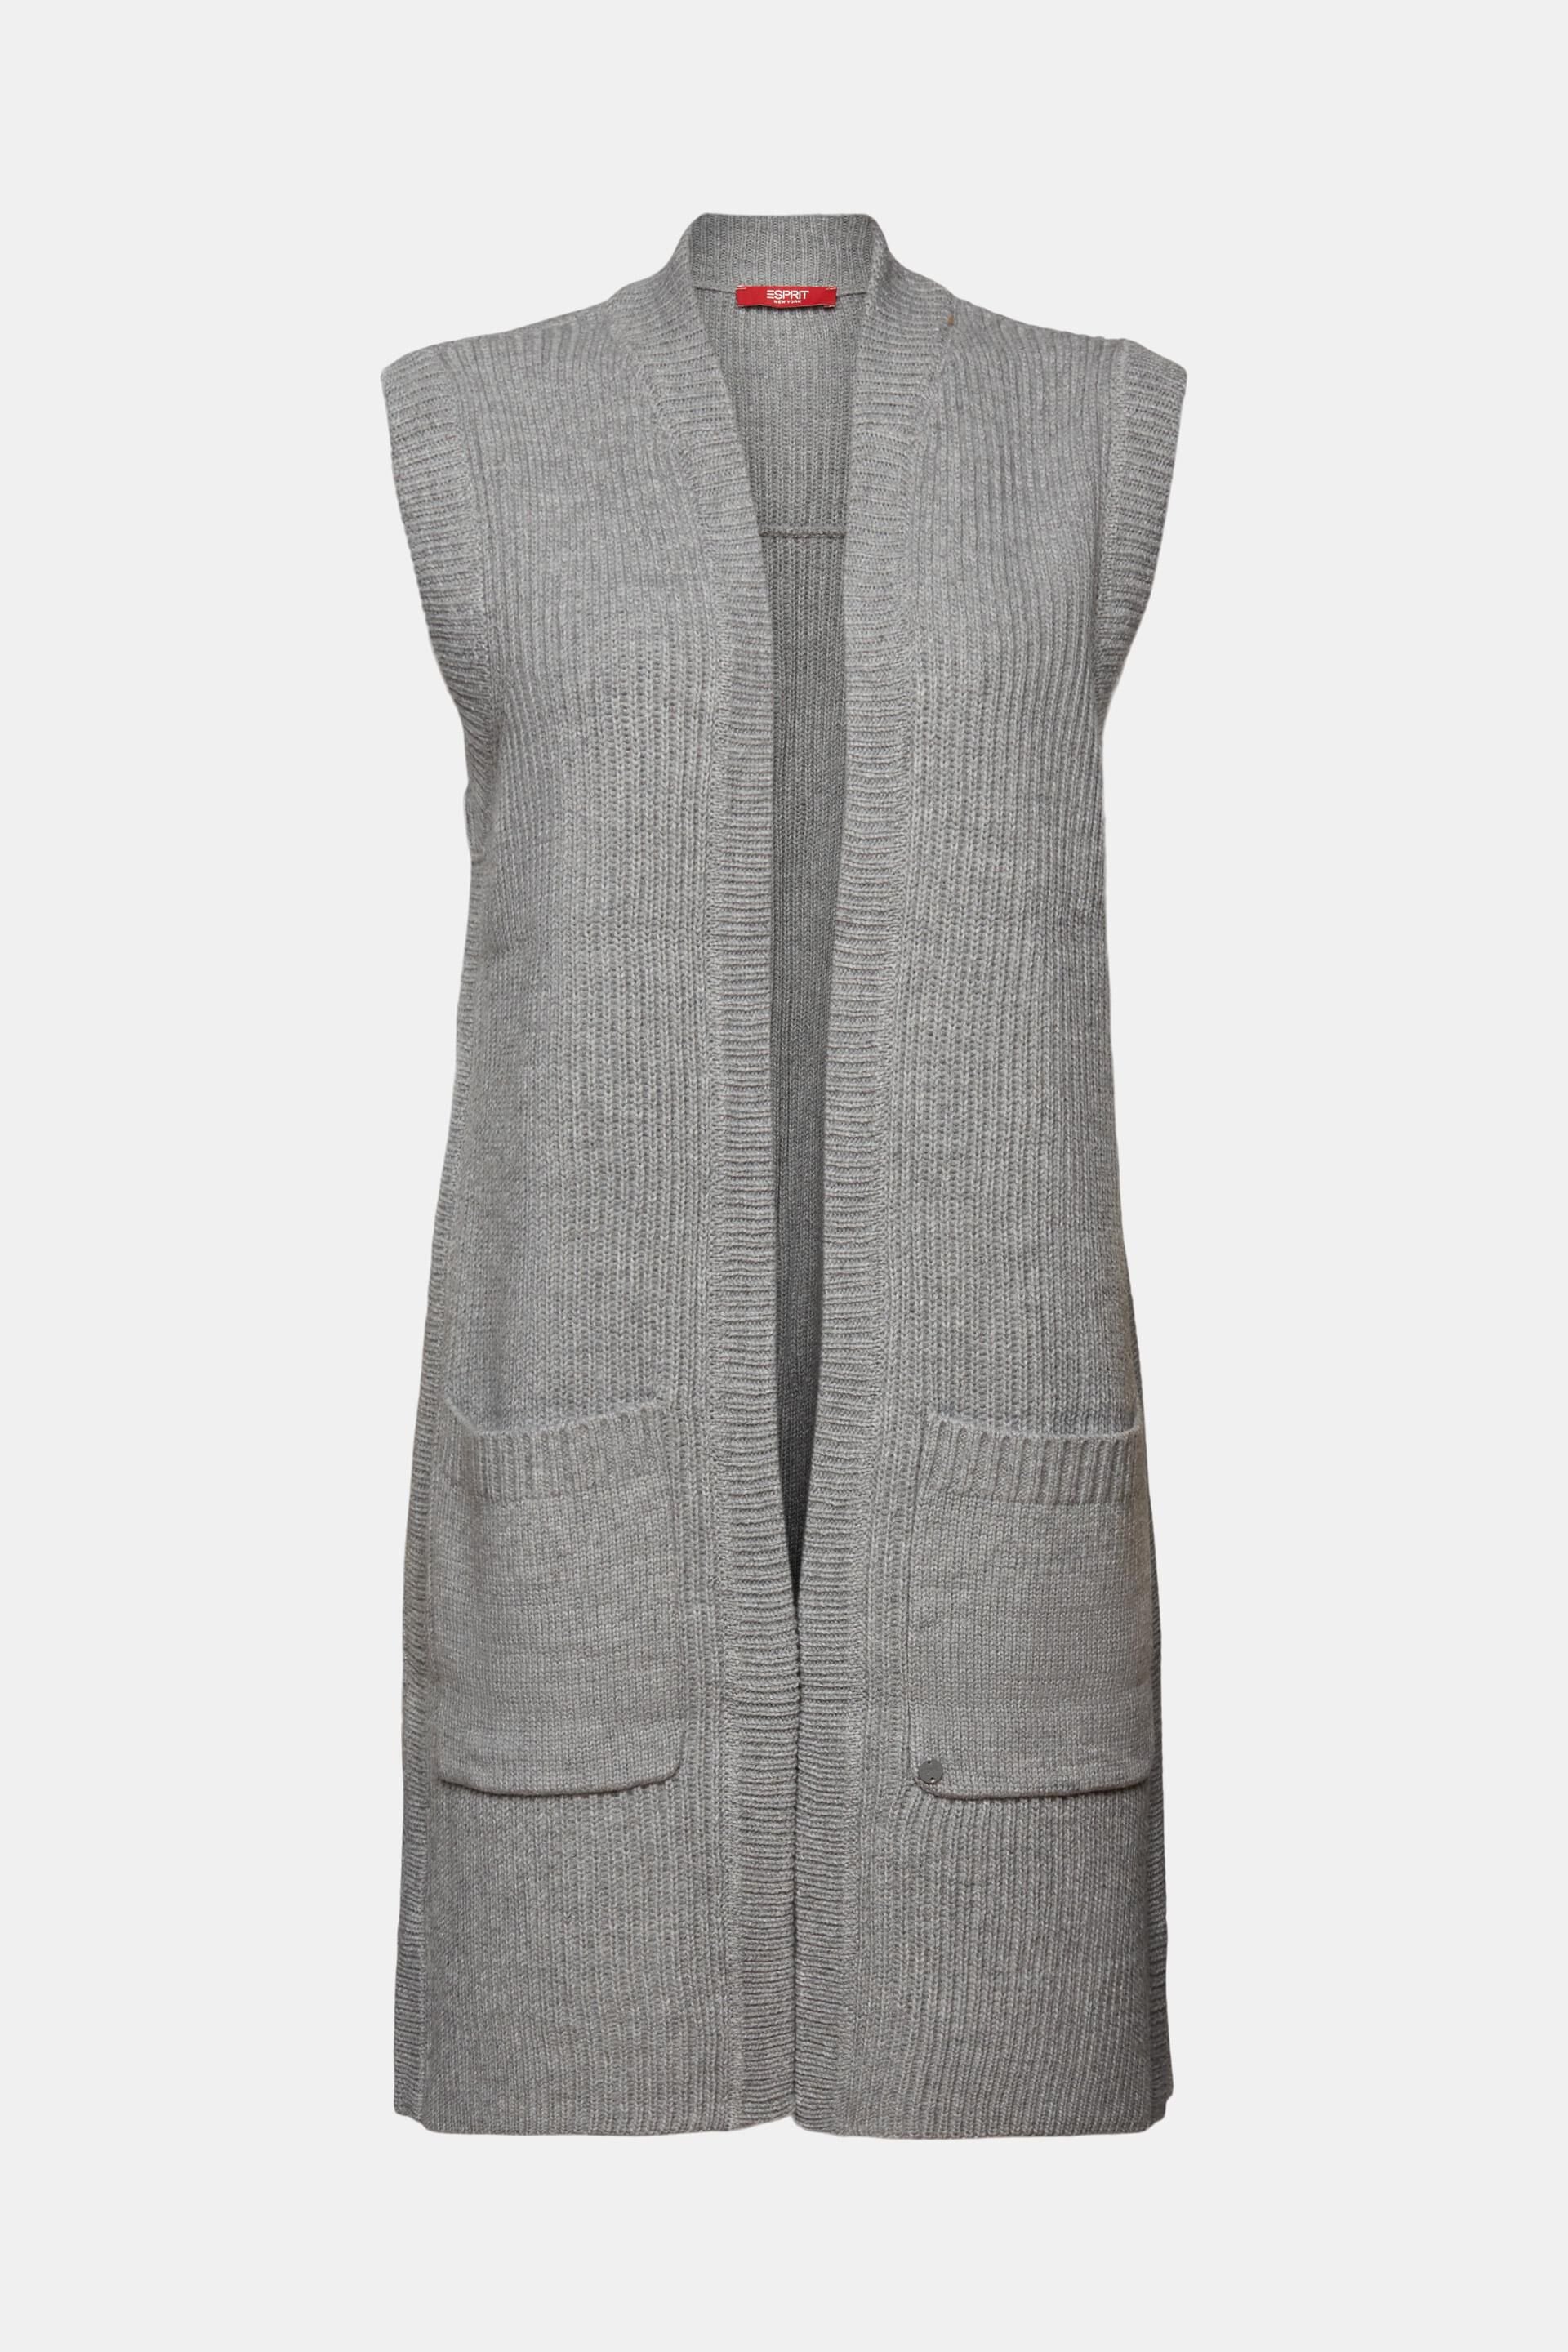 Esprit Online Store Recycled: longline sleeveless cardigan